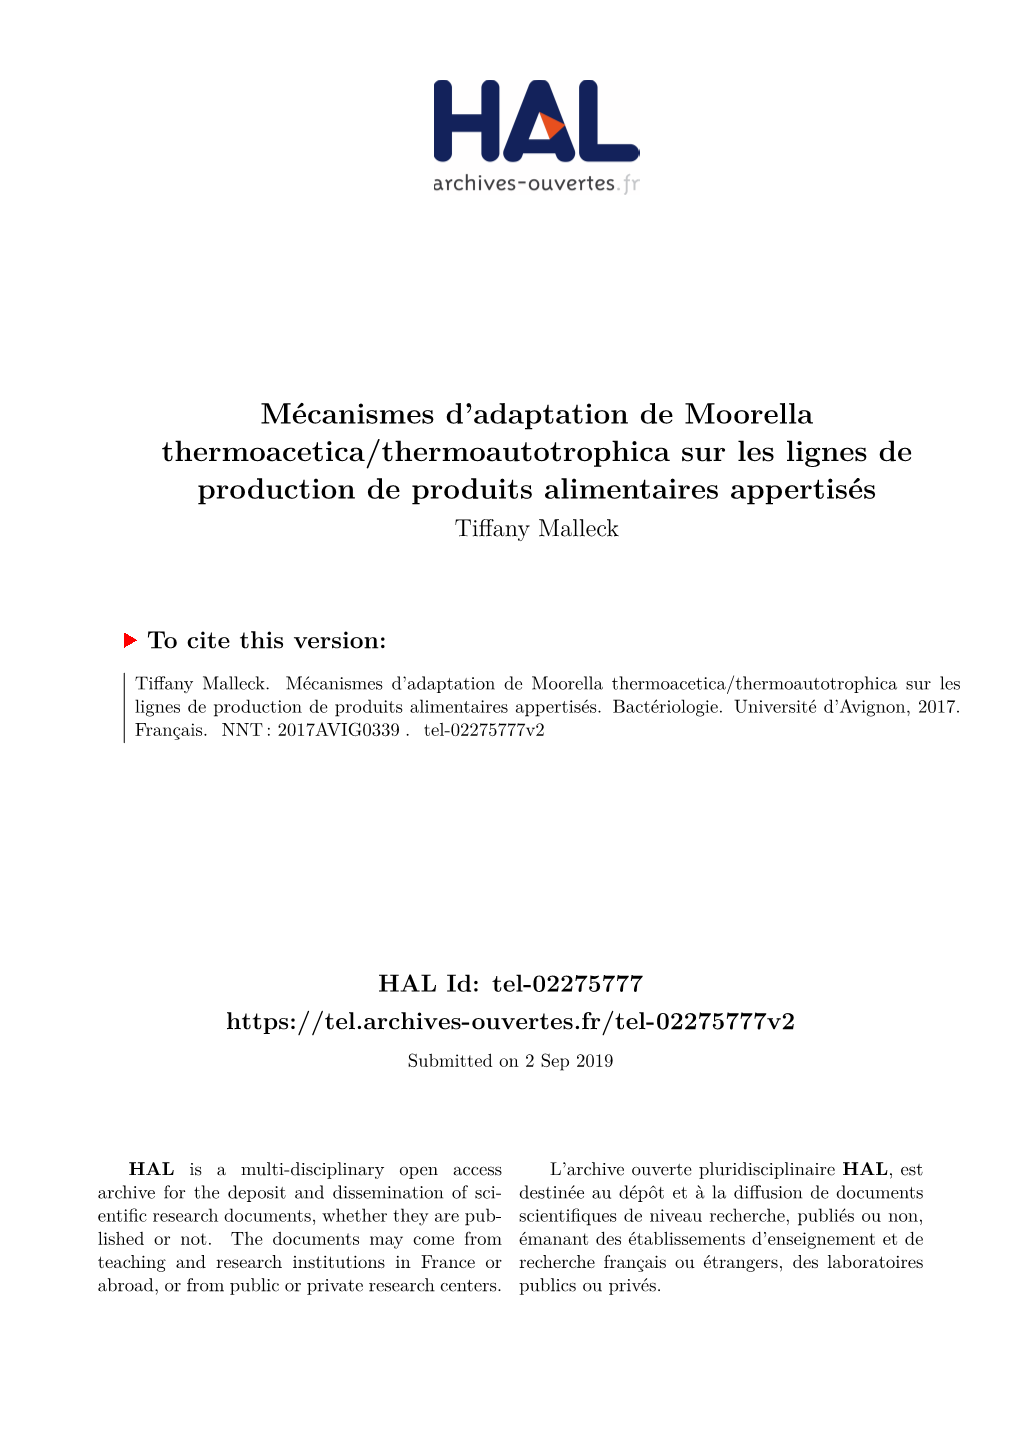 Mécanismes D'adaptation De Moorella Thermoacetica/Thermoautotrophica